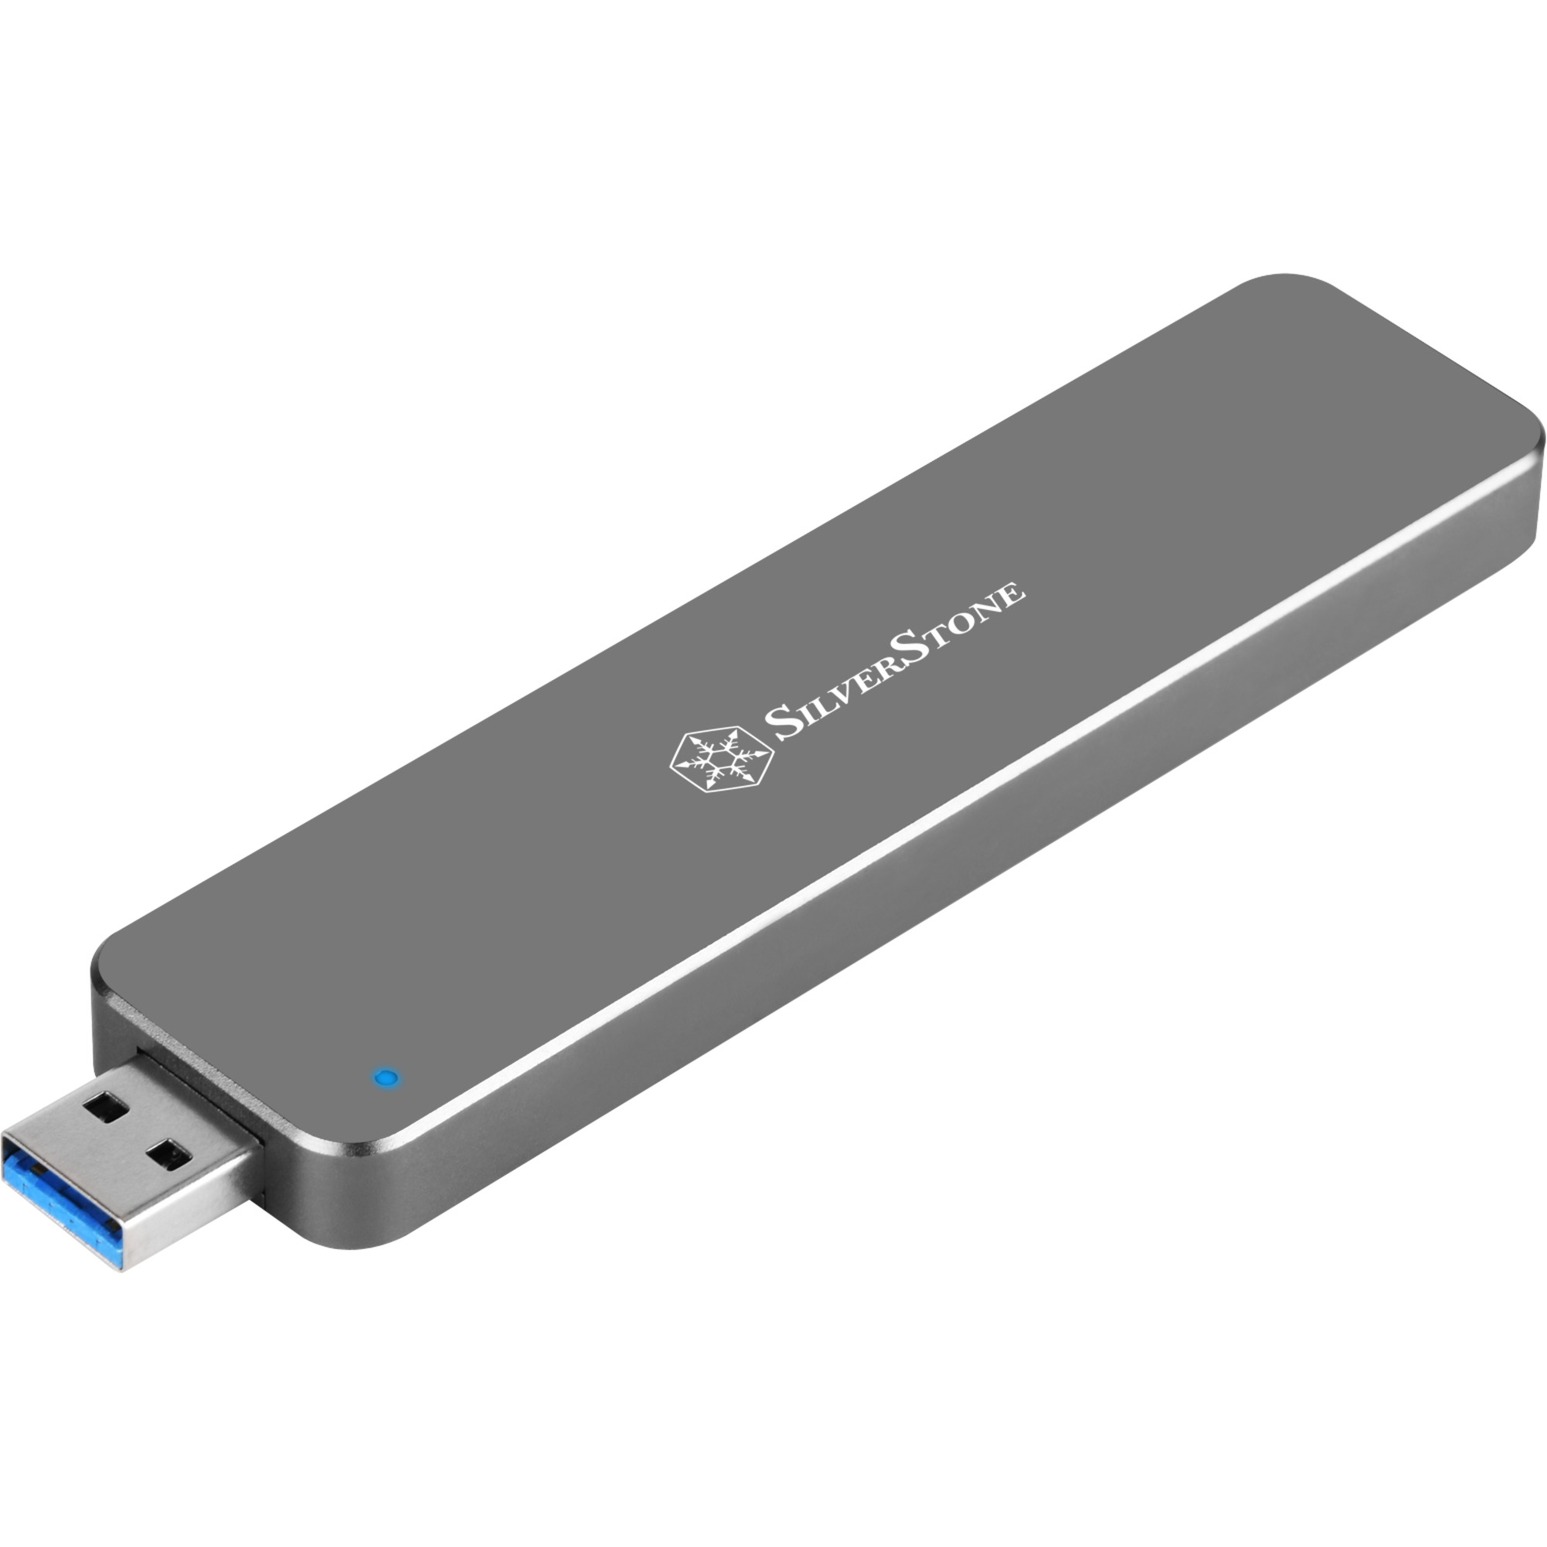 SST-MS09C USB 3.1